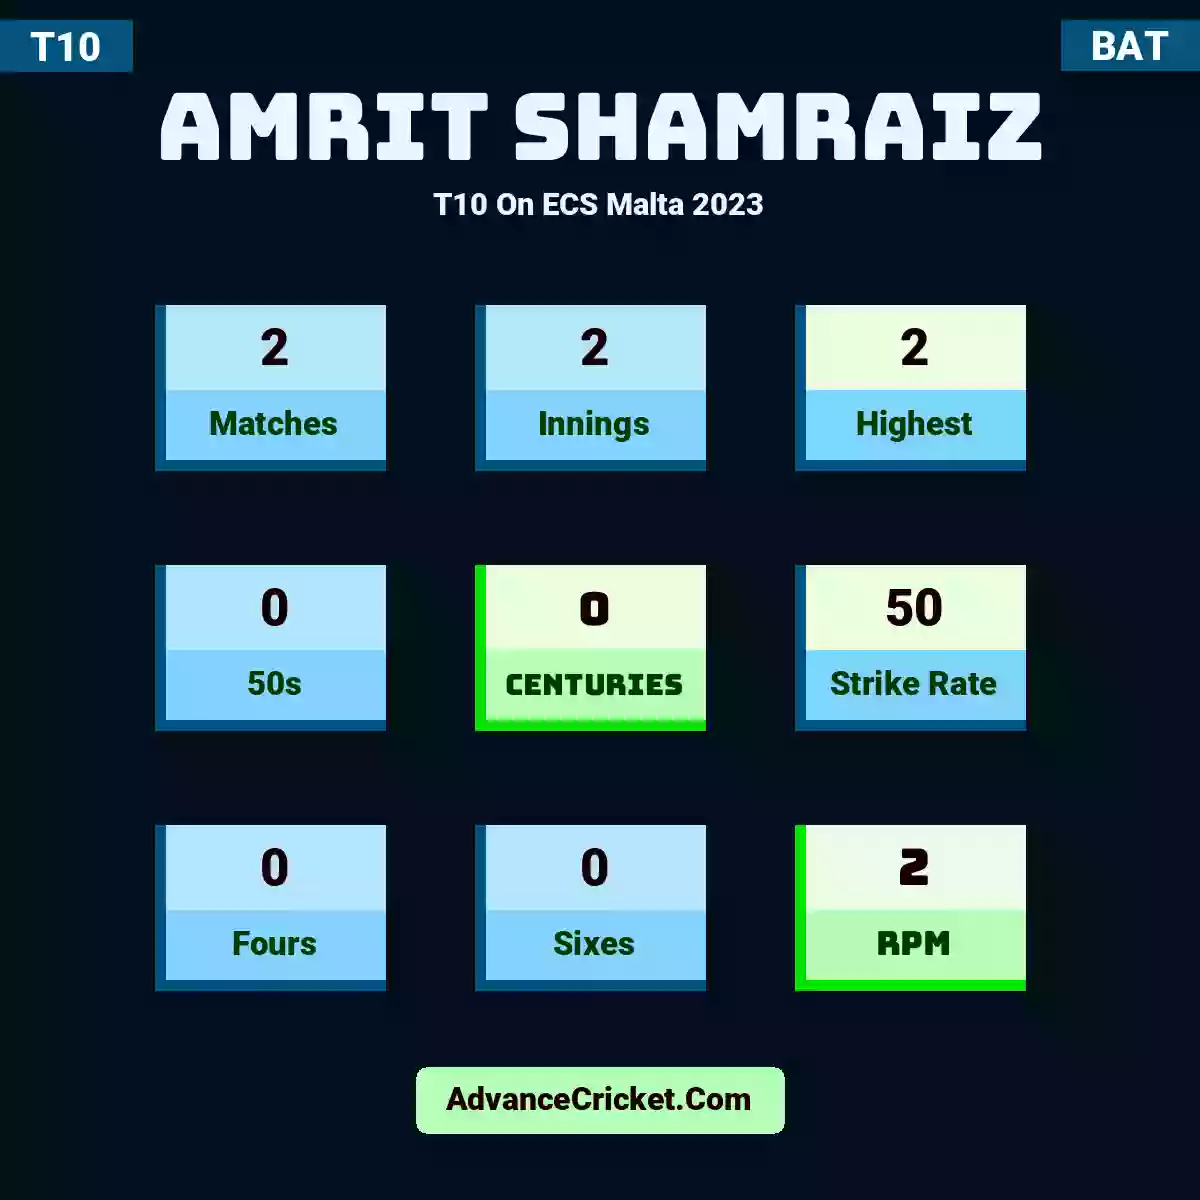 Amrit Shamraiz T10  On ECS Malta 2023, Amrit Shamraiz played 2 matches, scored 2 runs as highest, 0 half-centuries, and 0 centuries, with a strike rate of 50. A.Shamraiz hit 0 fours and 0 sixes, with an RPM of 2.